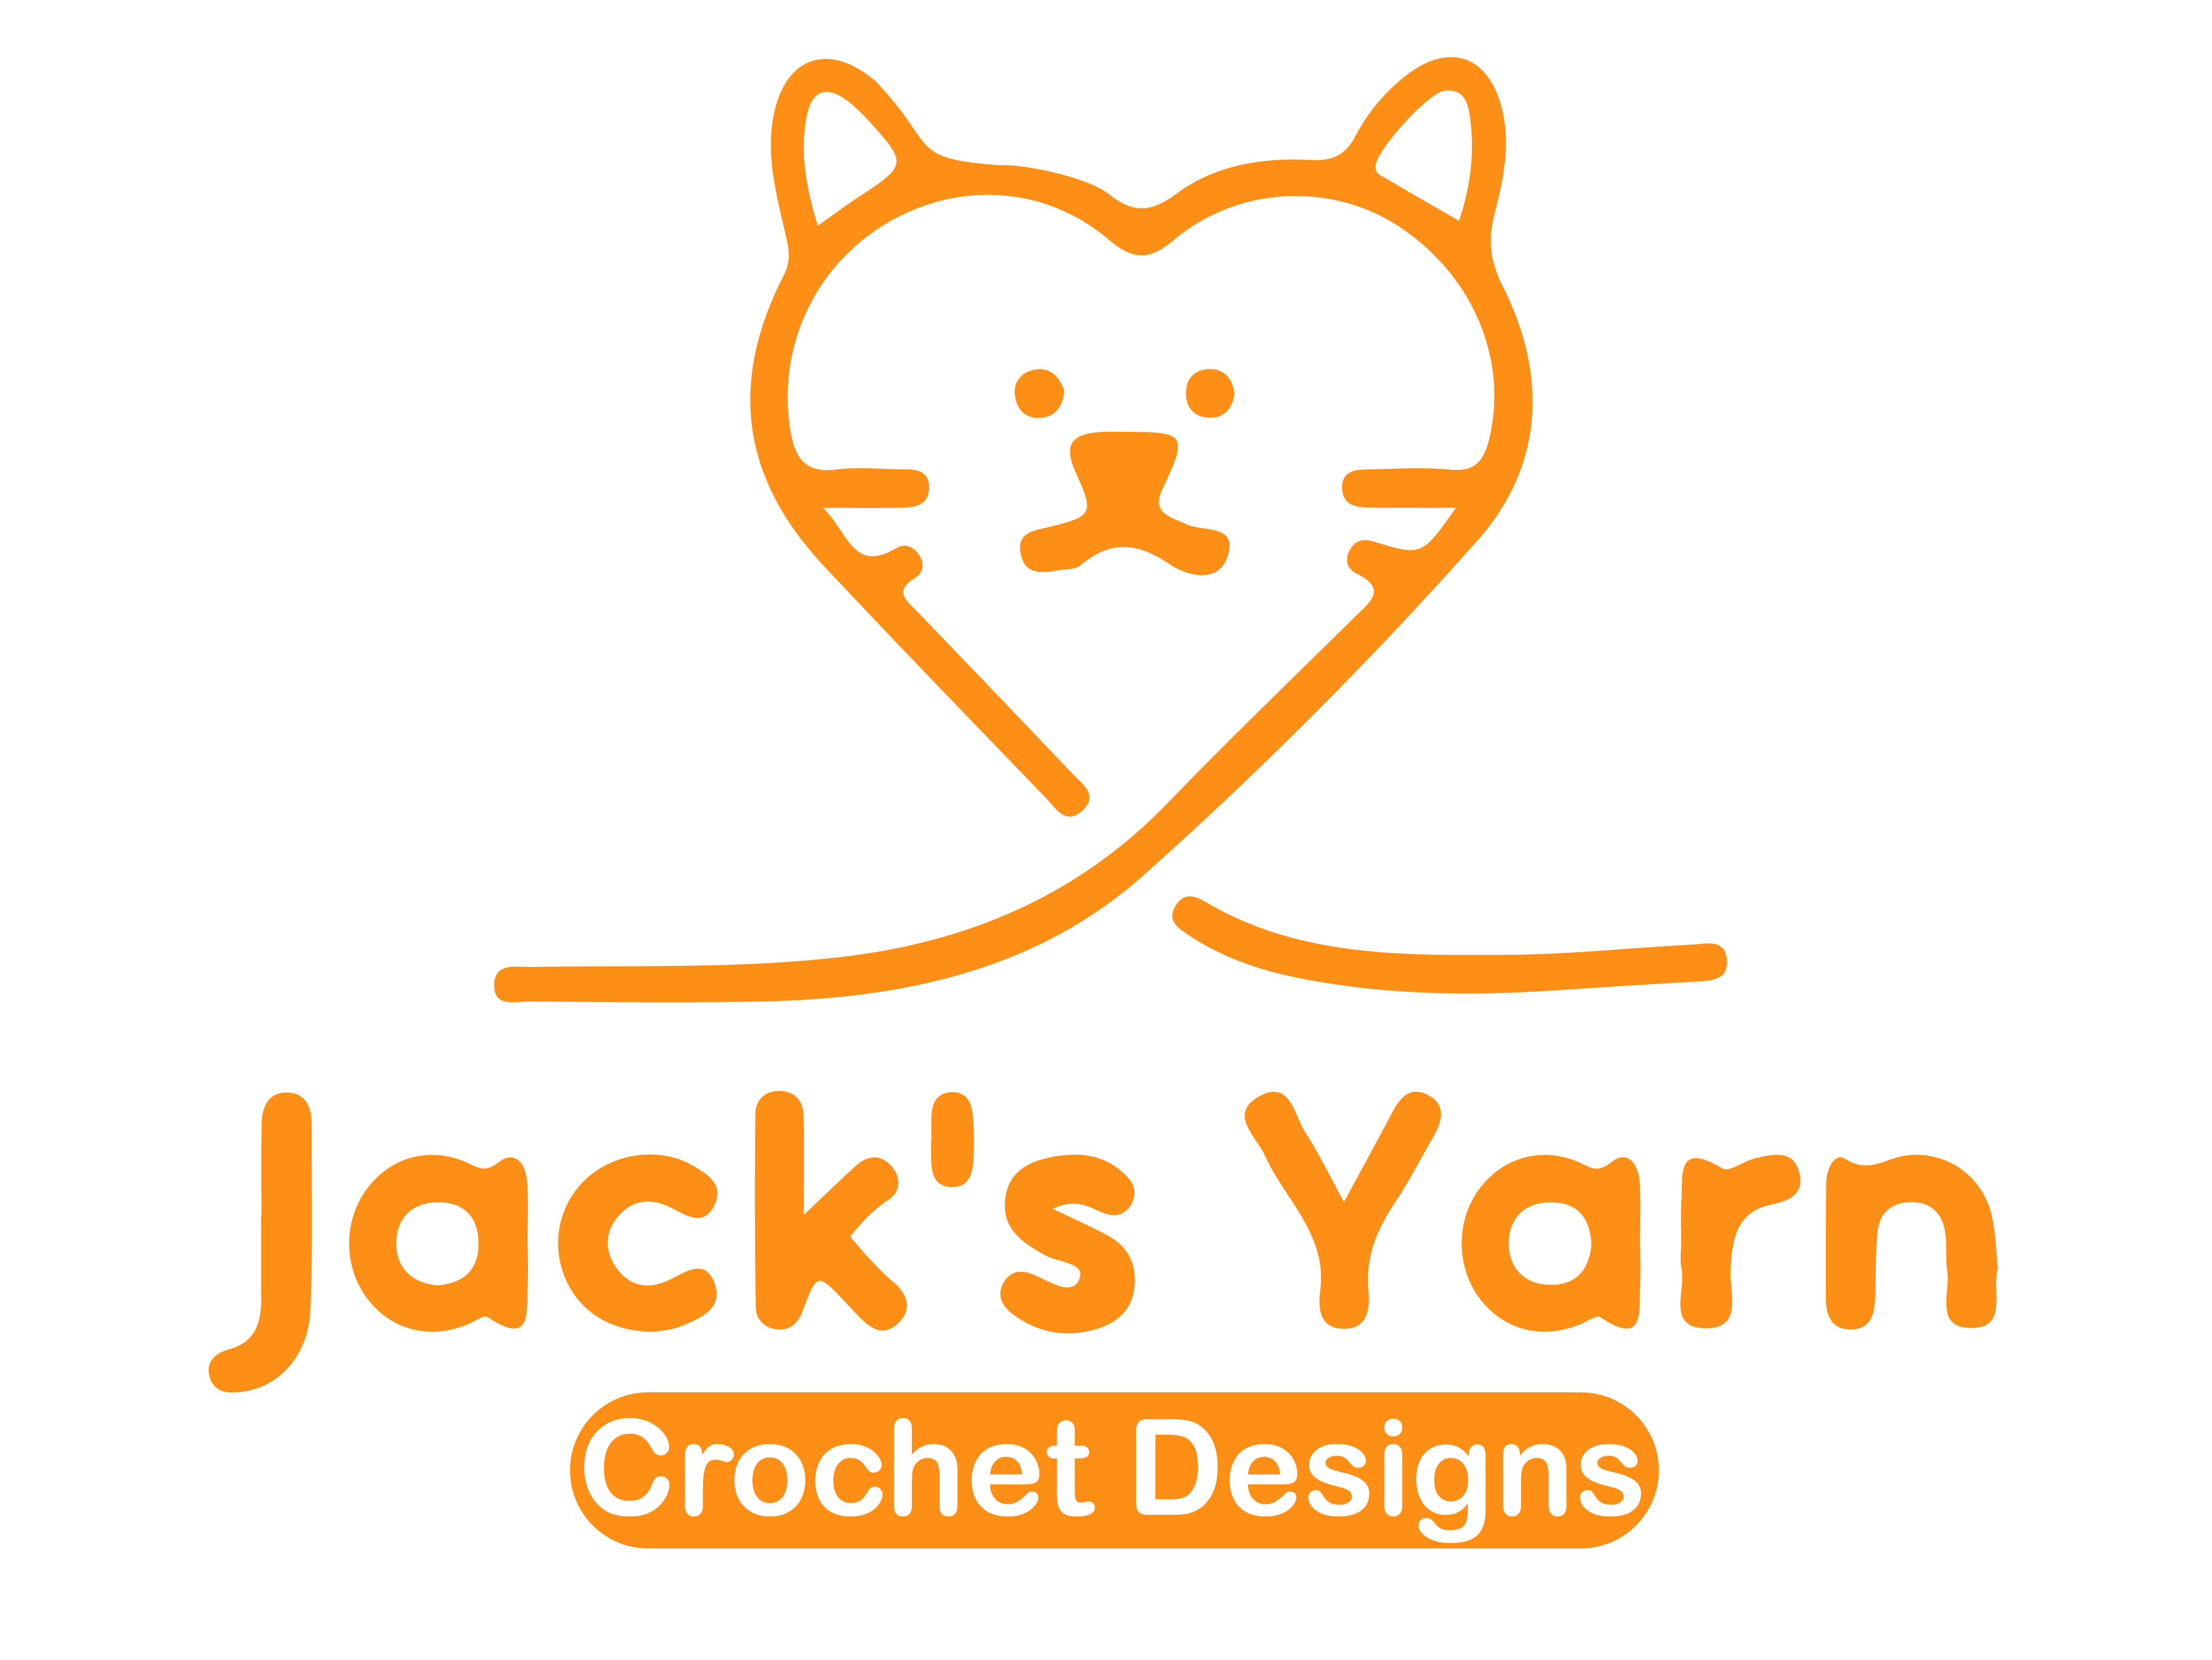 Jack's Yarn Crochet Designs